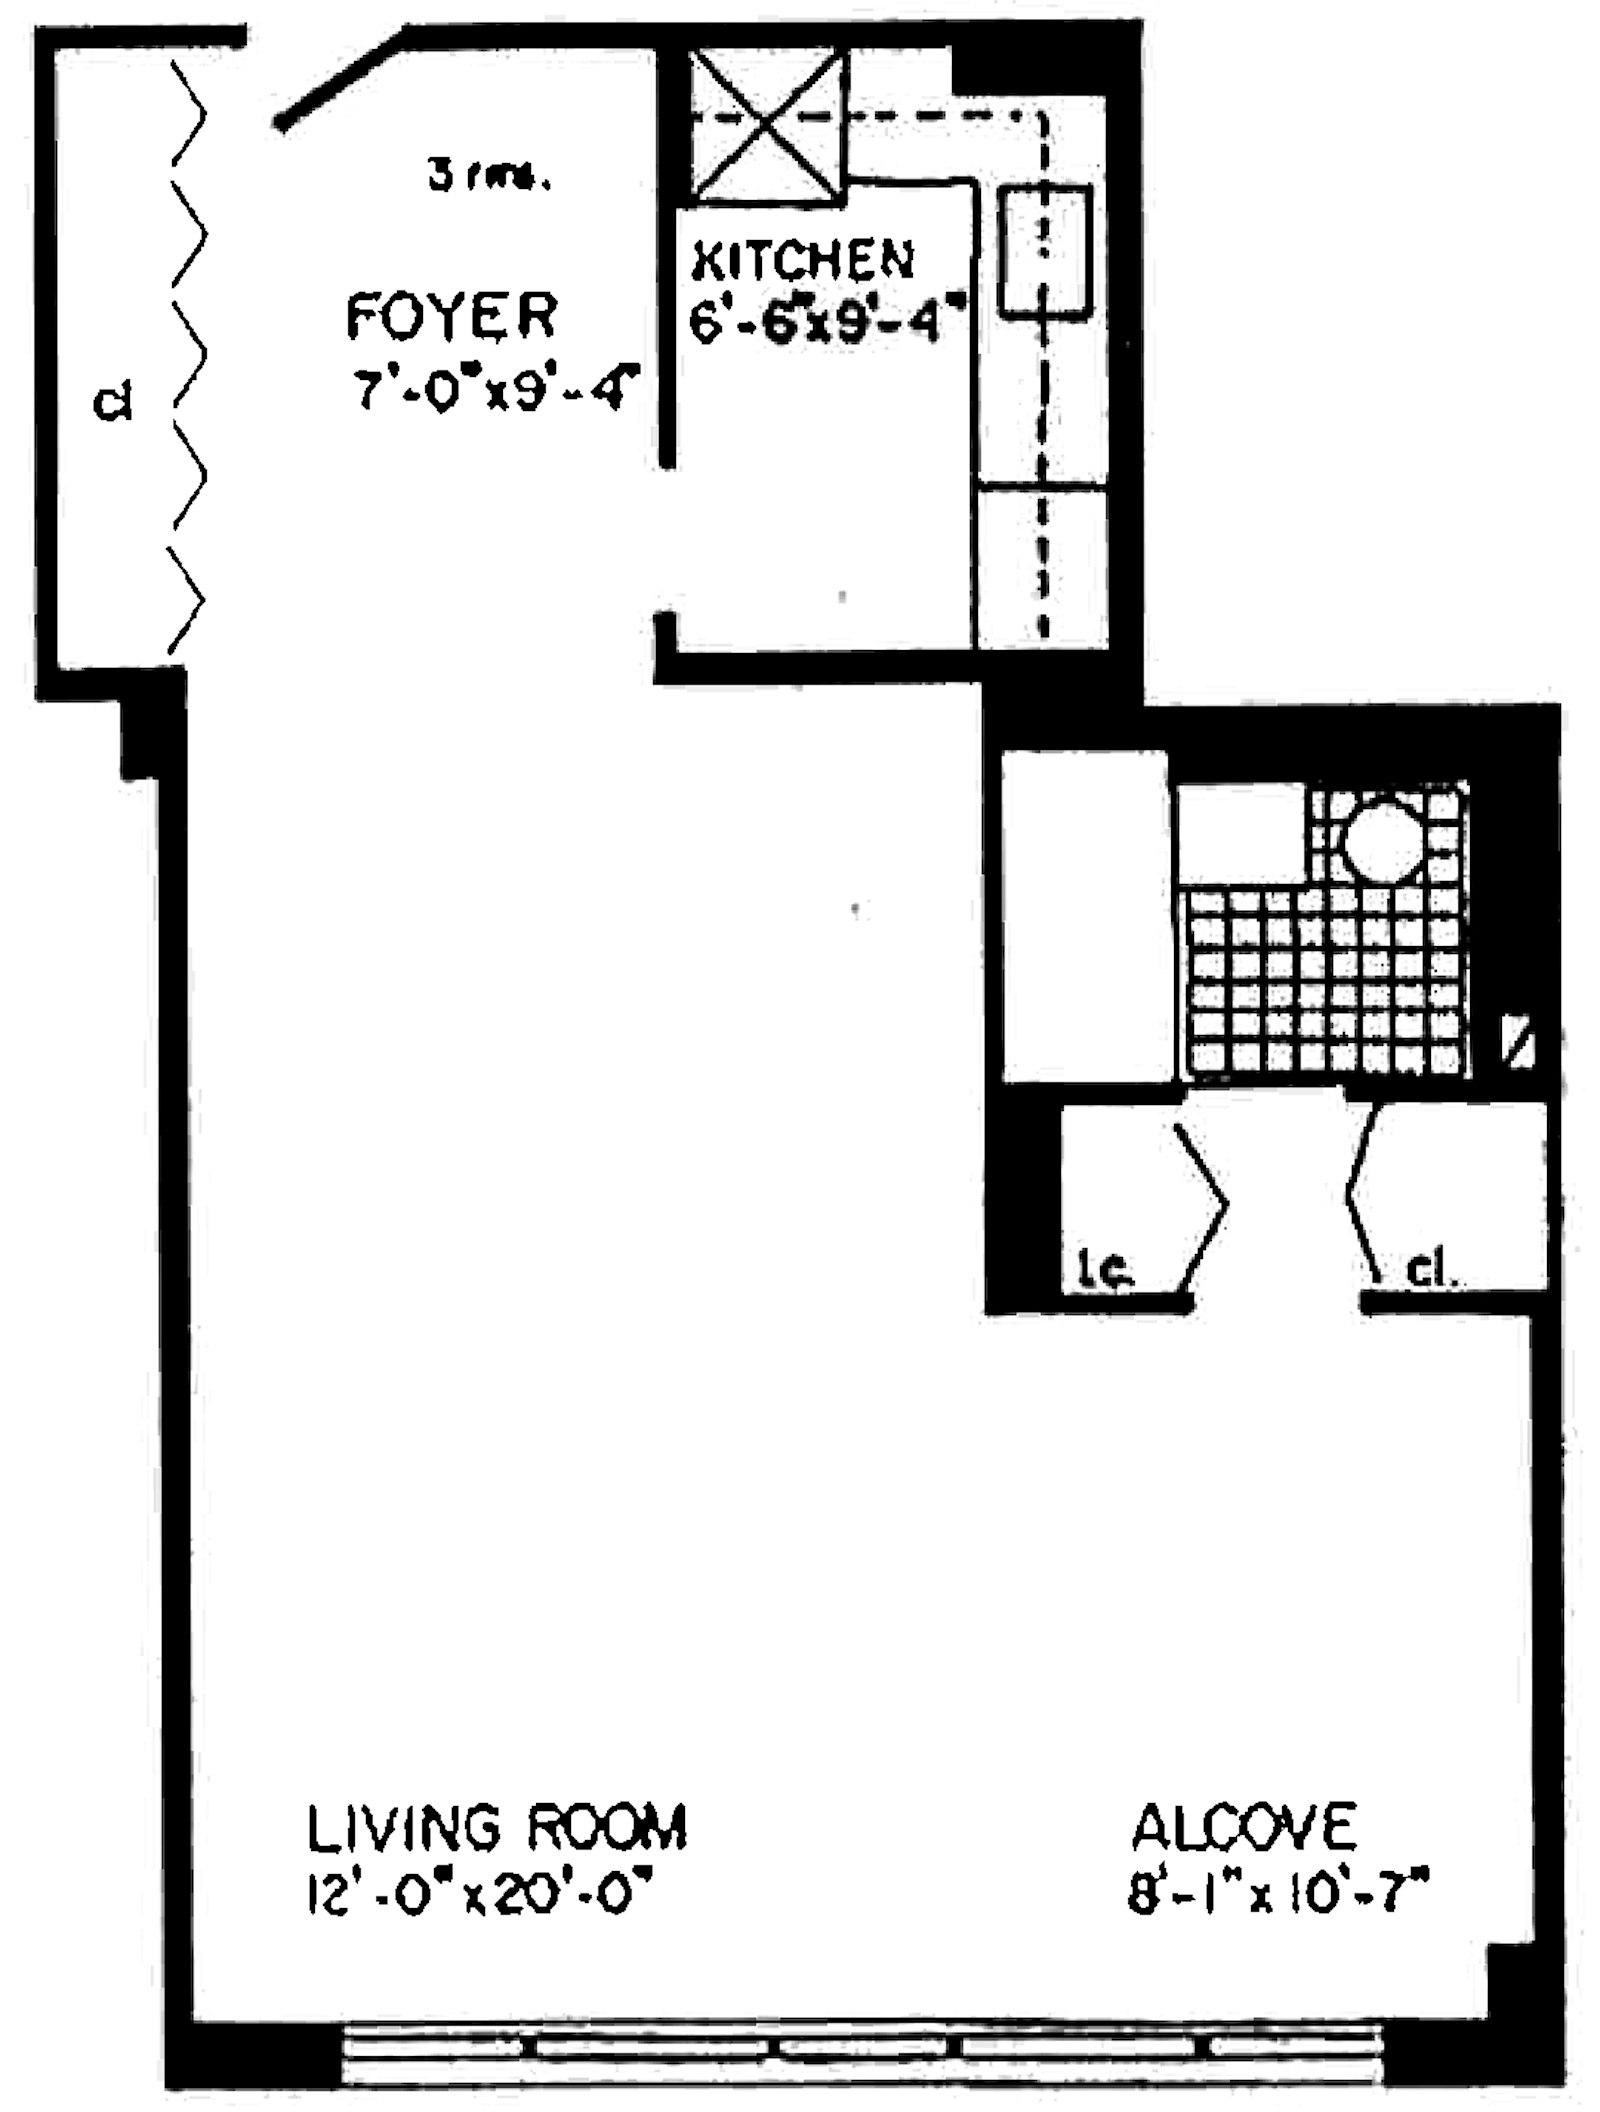 Floorplan for 230 East 15th Street, 2B